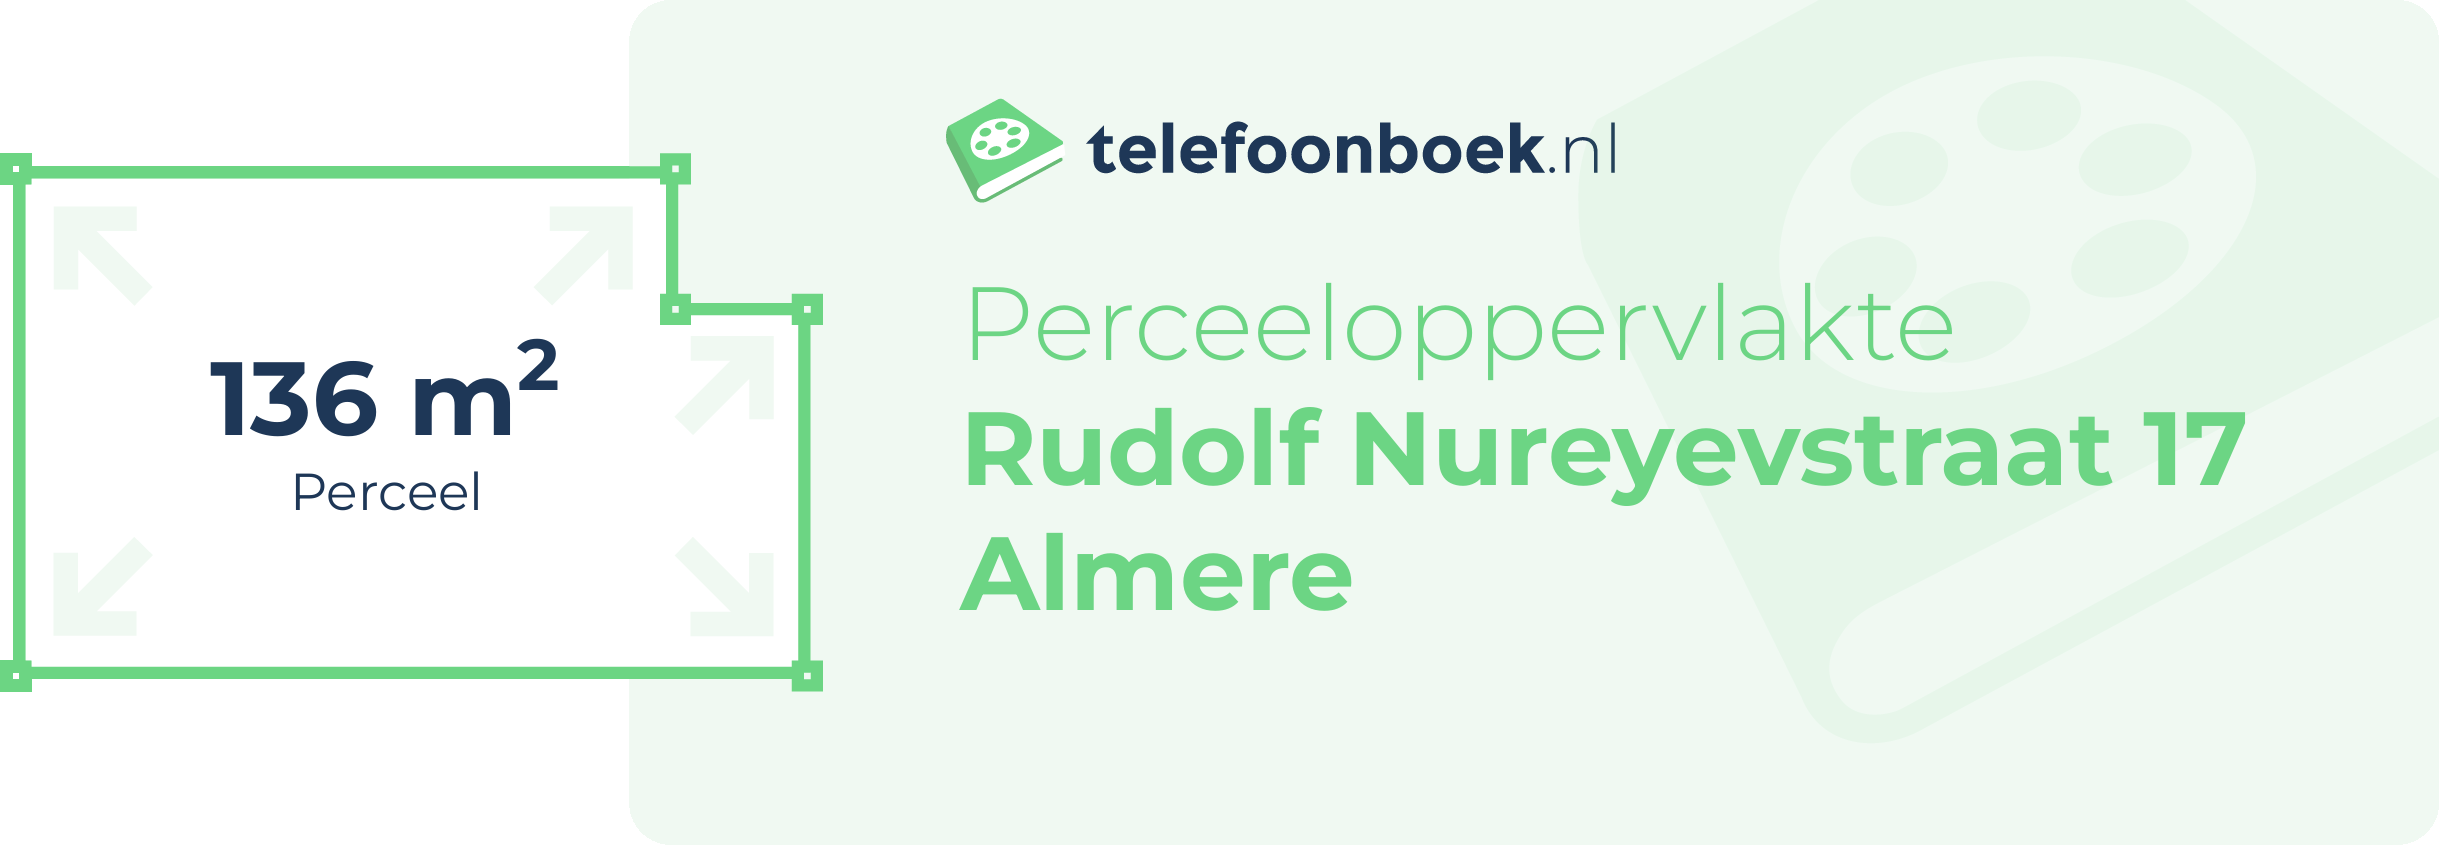 Perceeloppervlakte Rudolf Nureyevstraat 17 Almere